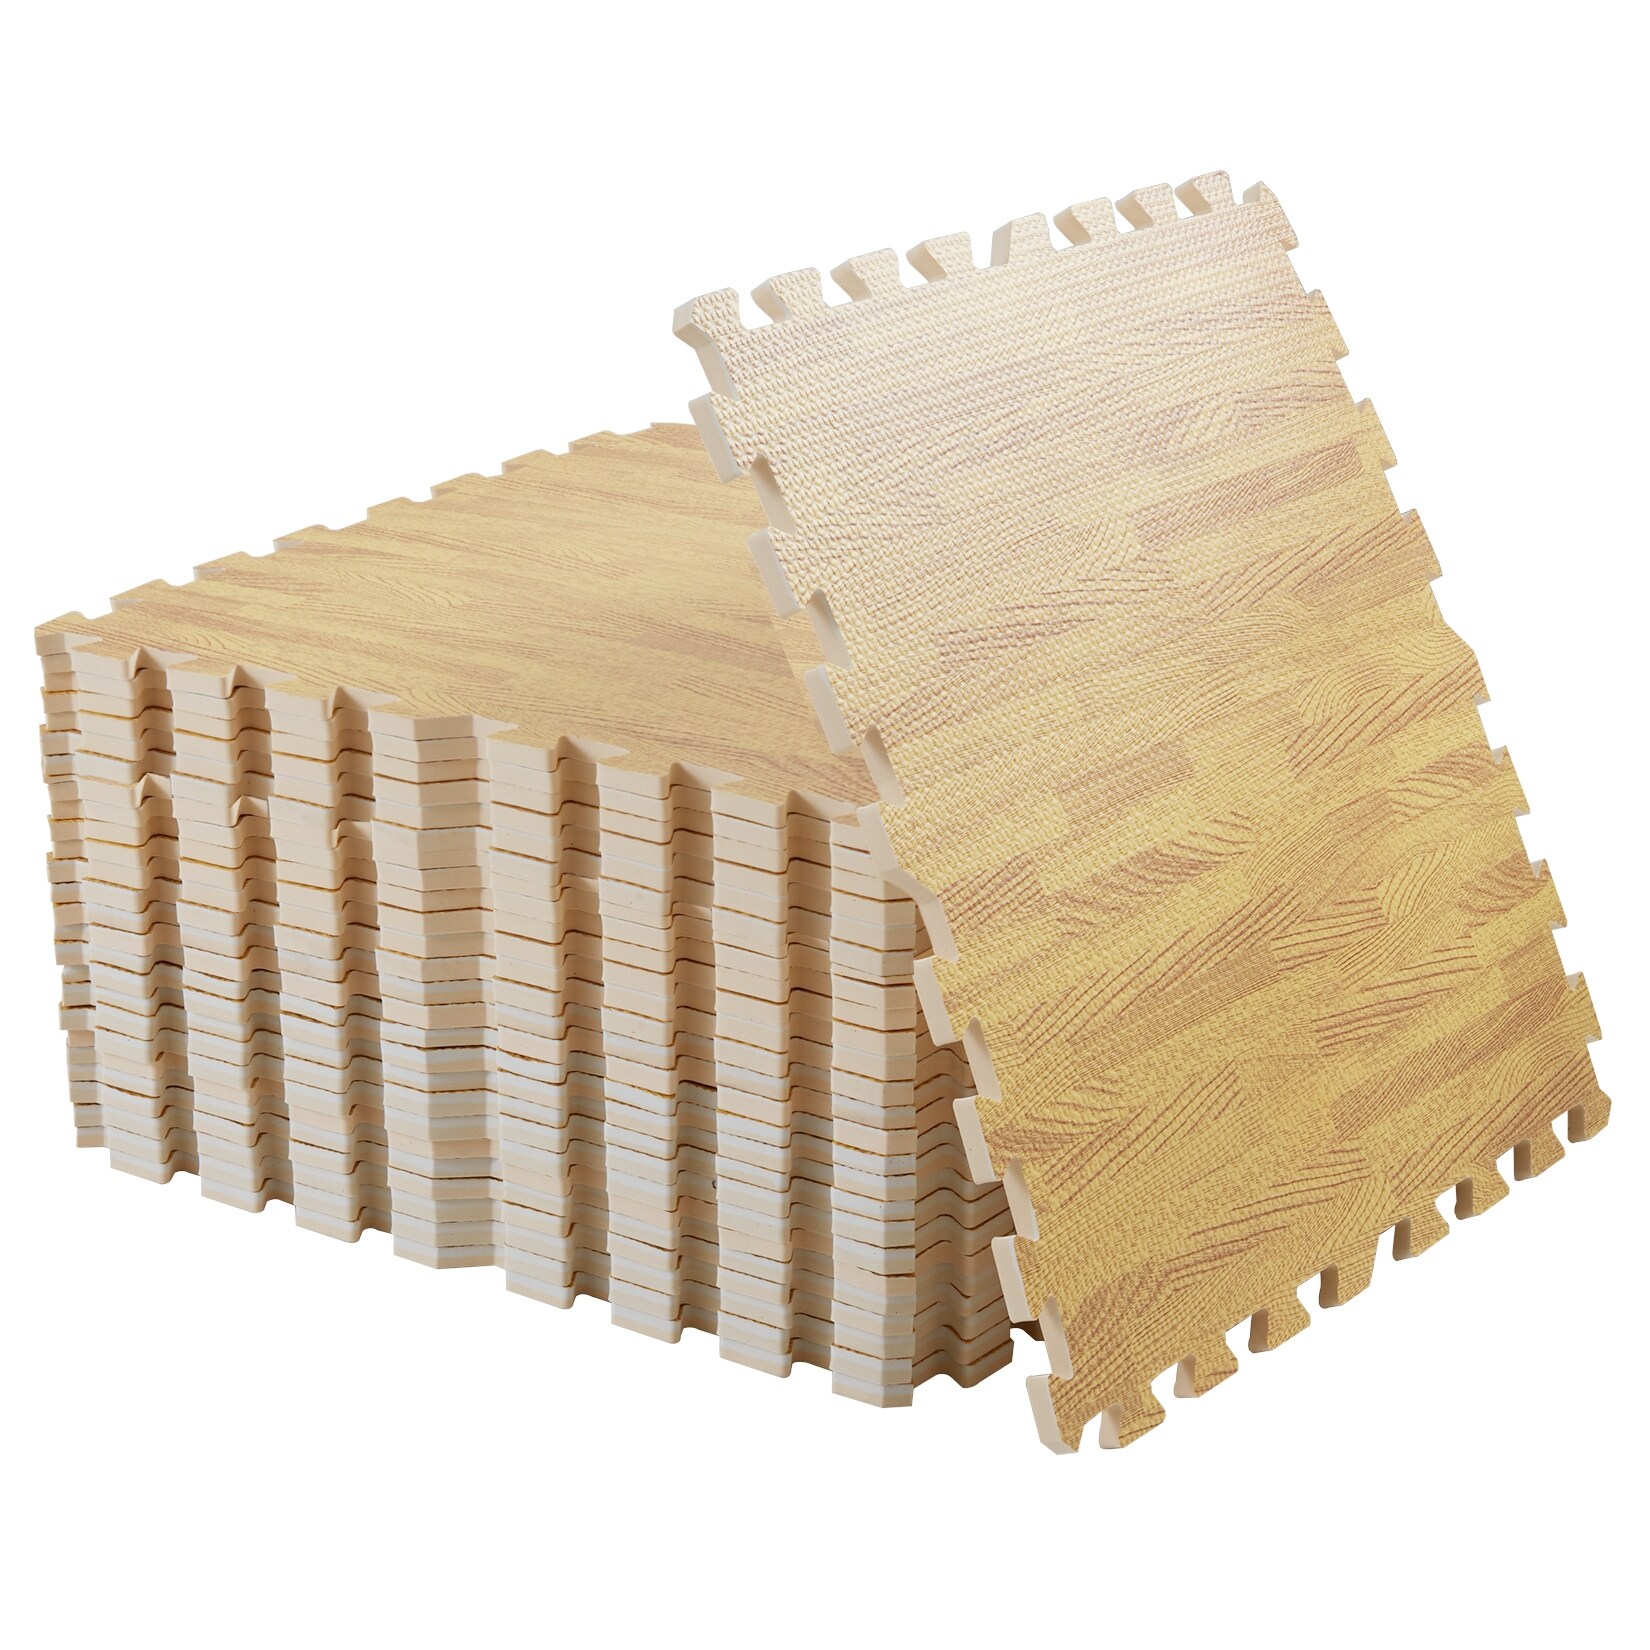 https://ak1.ostkcdn.com/images/products/is/images/direct/020e47b24e66beed672b84402d27e8cae7db0c39/12-Tiles-Interlocking-Foam-Floor-Mats-Wood-Grain.jpg